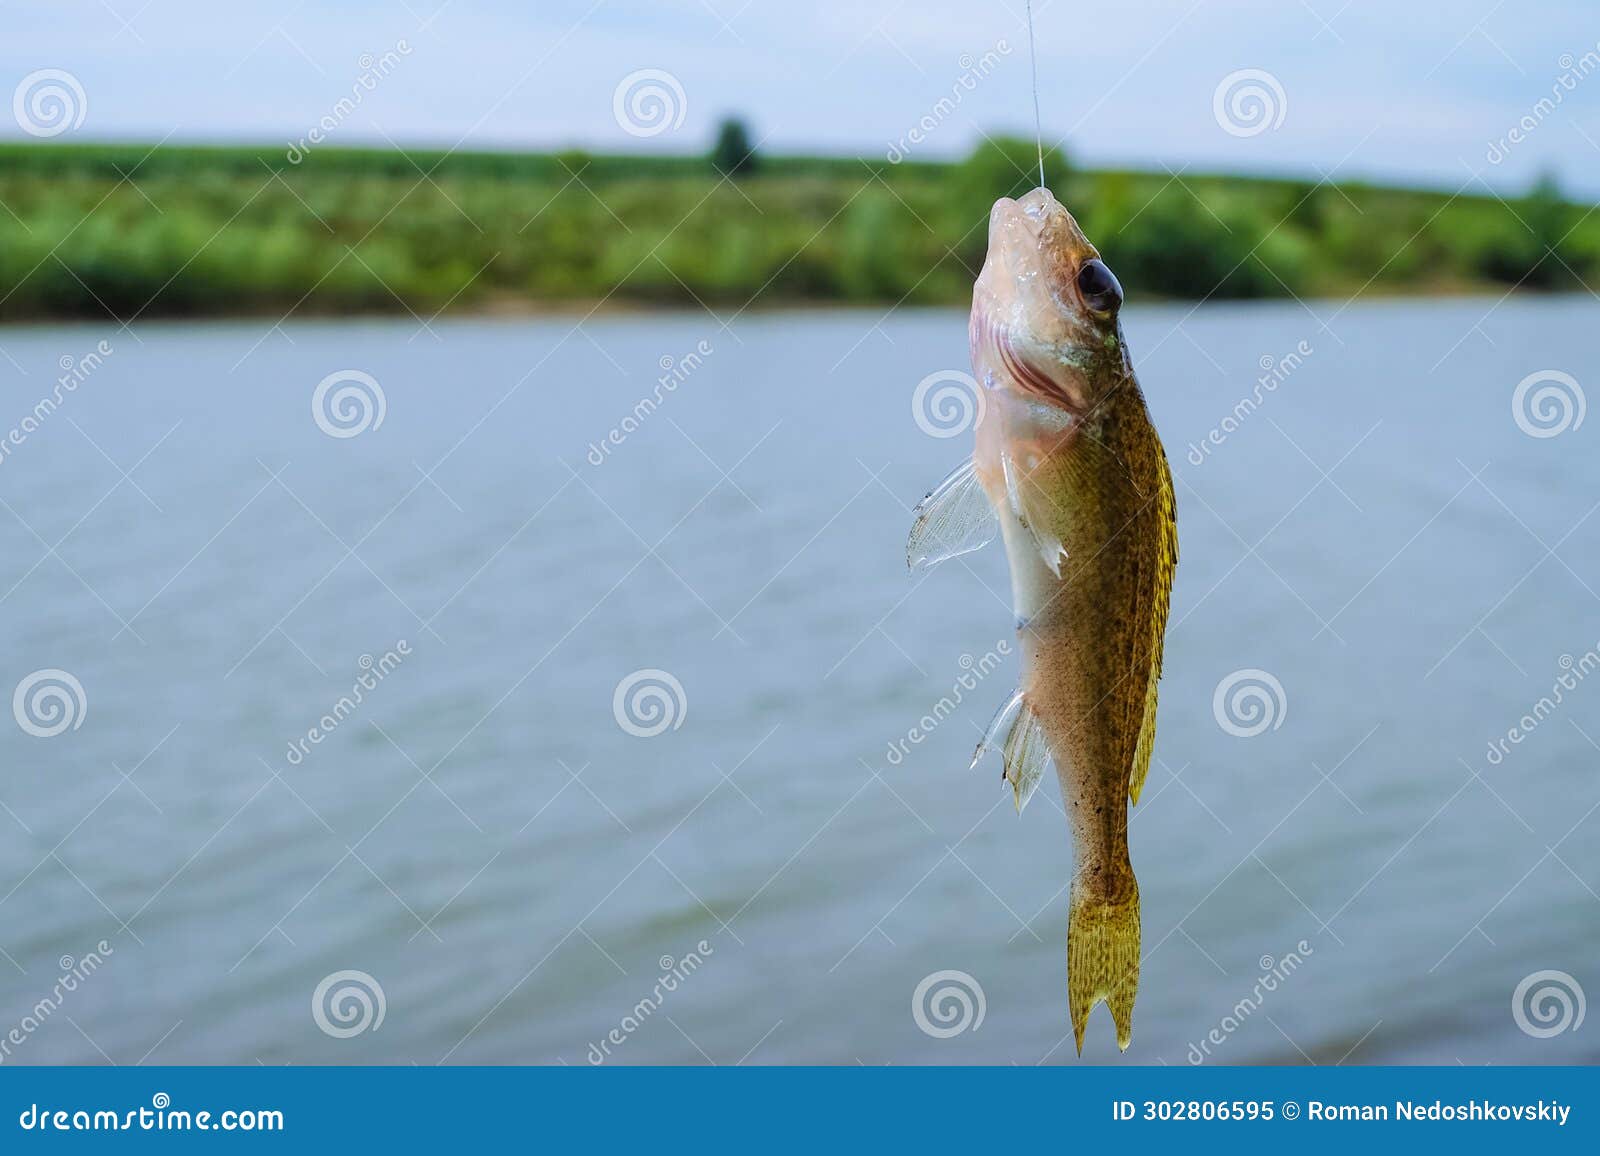 https://thumbs.dreamstime.com/z/fish-fishing-line-caught-pond-fish-fishing-line-caught-pond-caught-hook-live-ruffe-fish-302806595.jpg